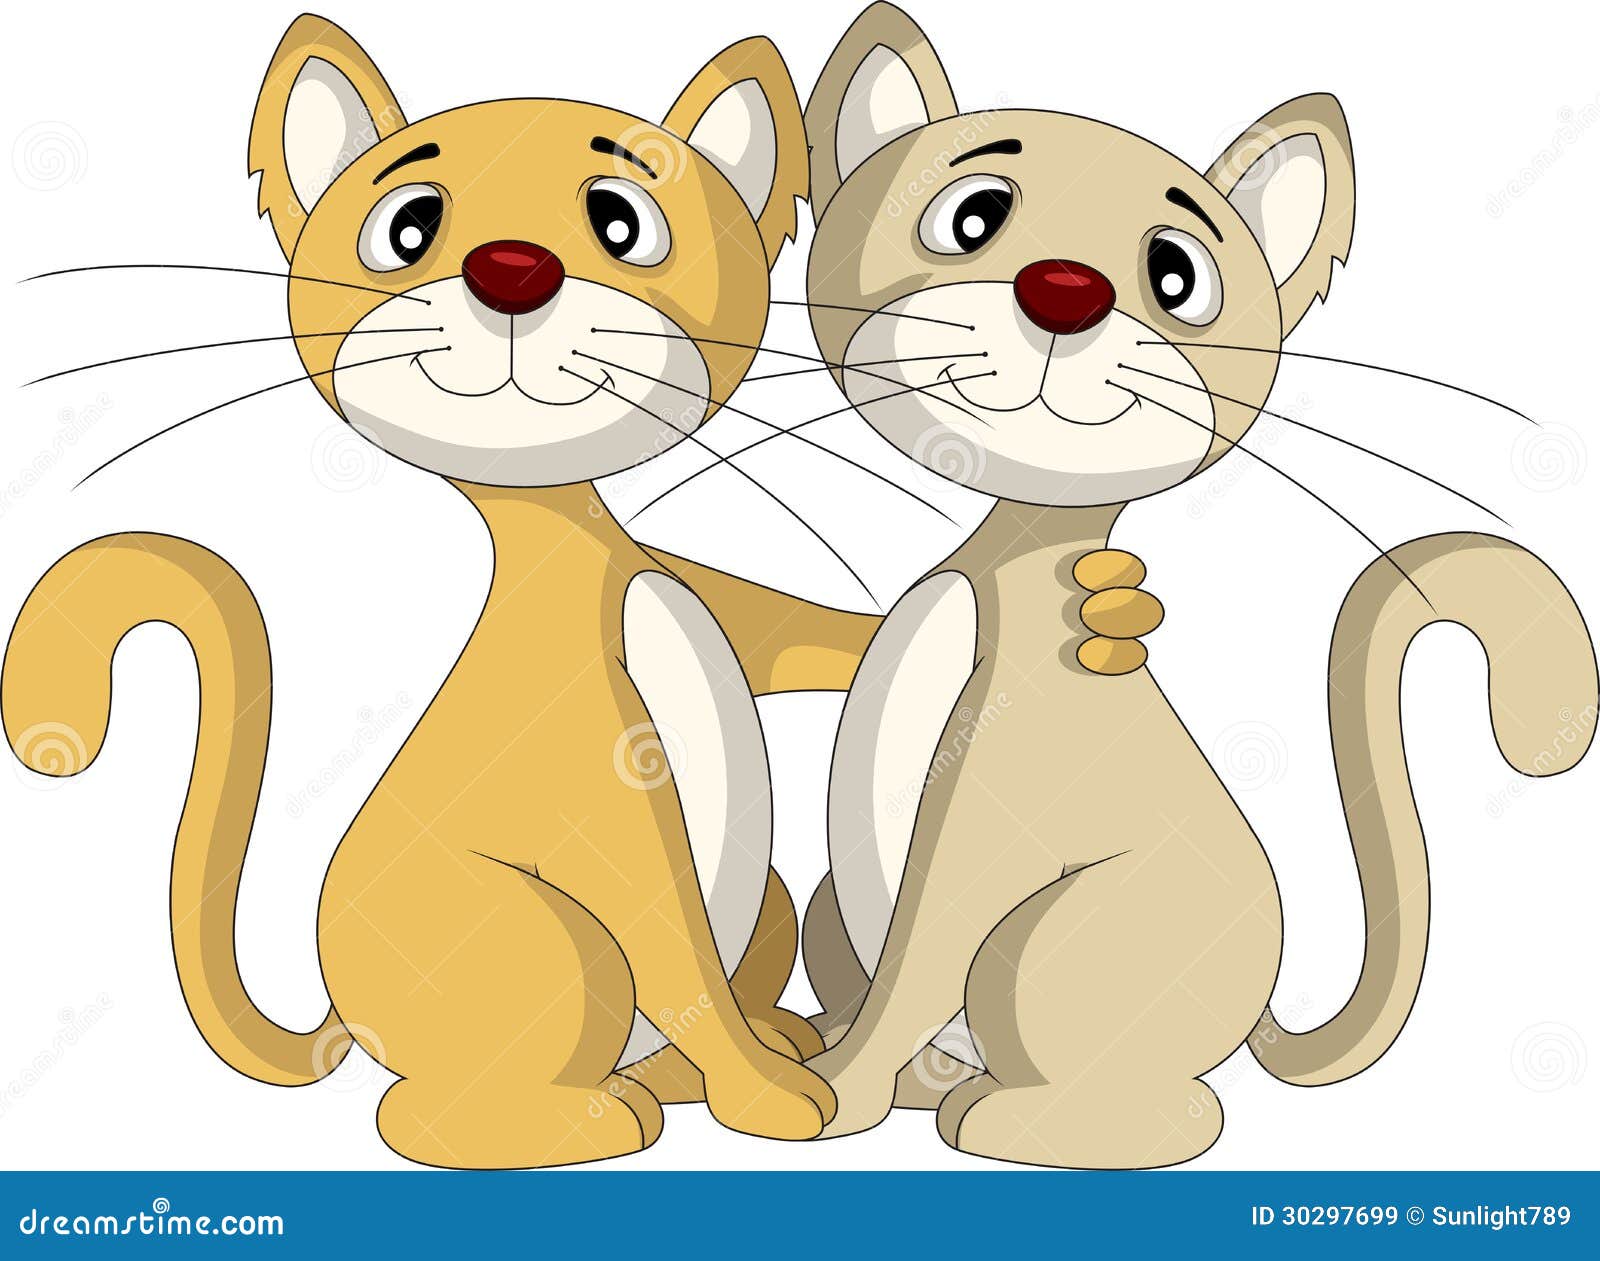 Cute couple cat stock illustration. Illustration of heart - 30297699